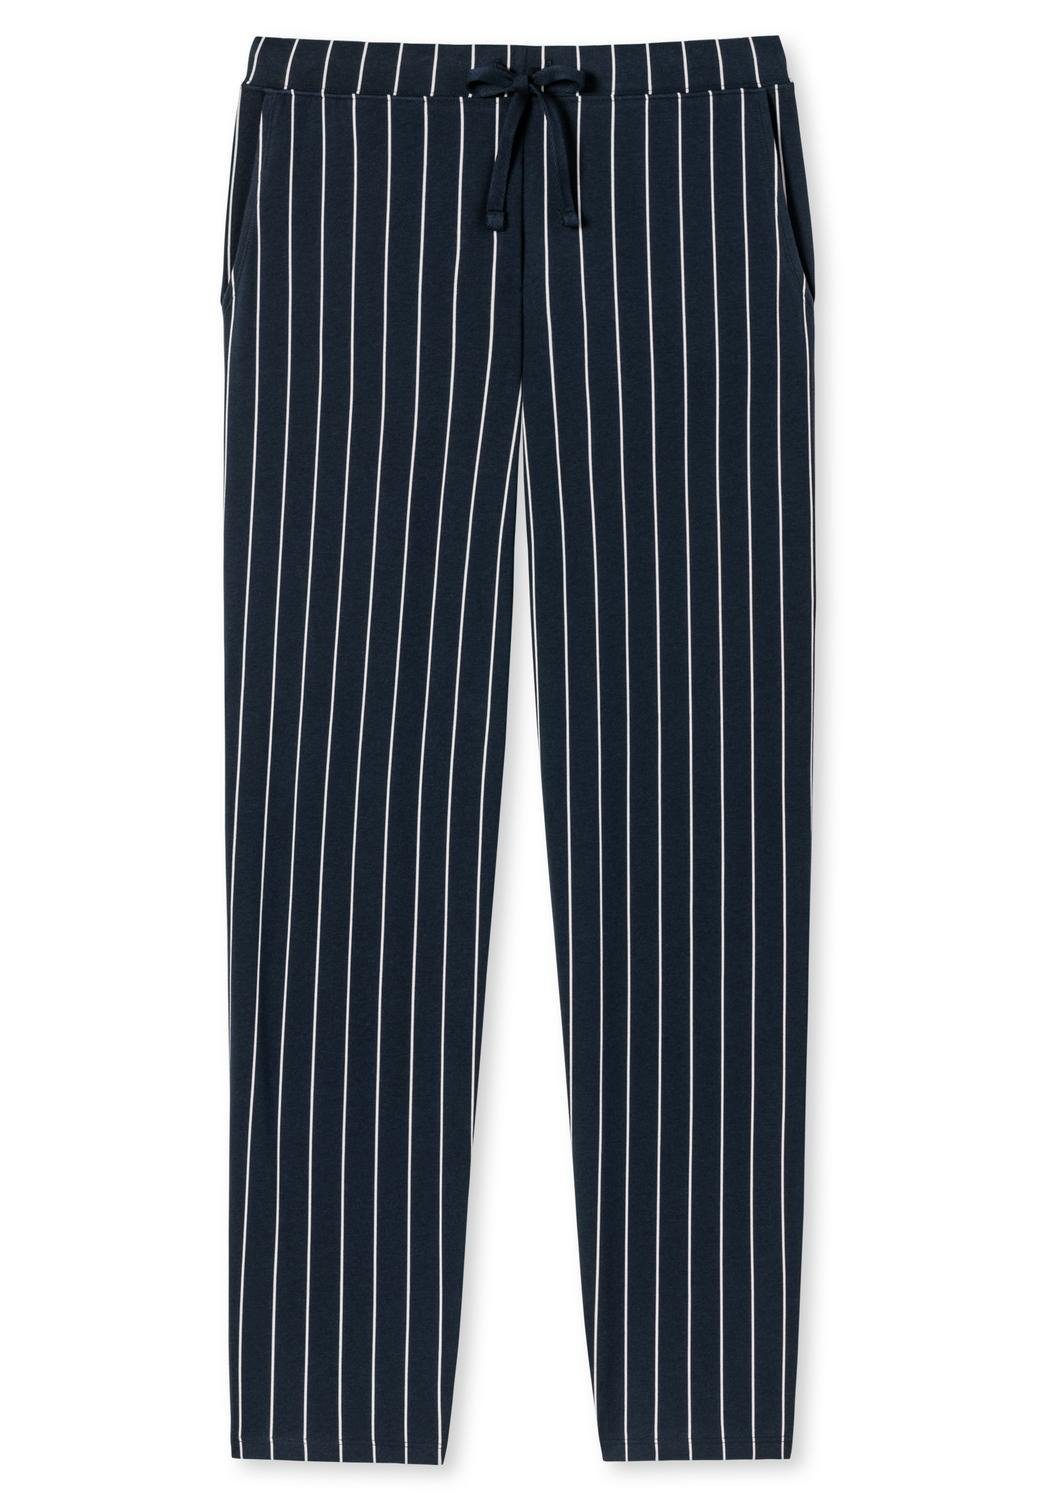 sonstige Hose Schiesser 1 lang, Pyjama multicolor